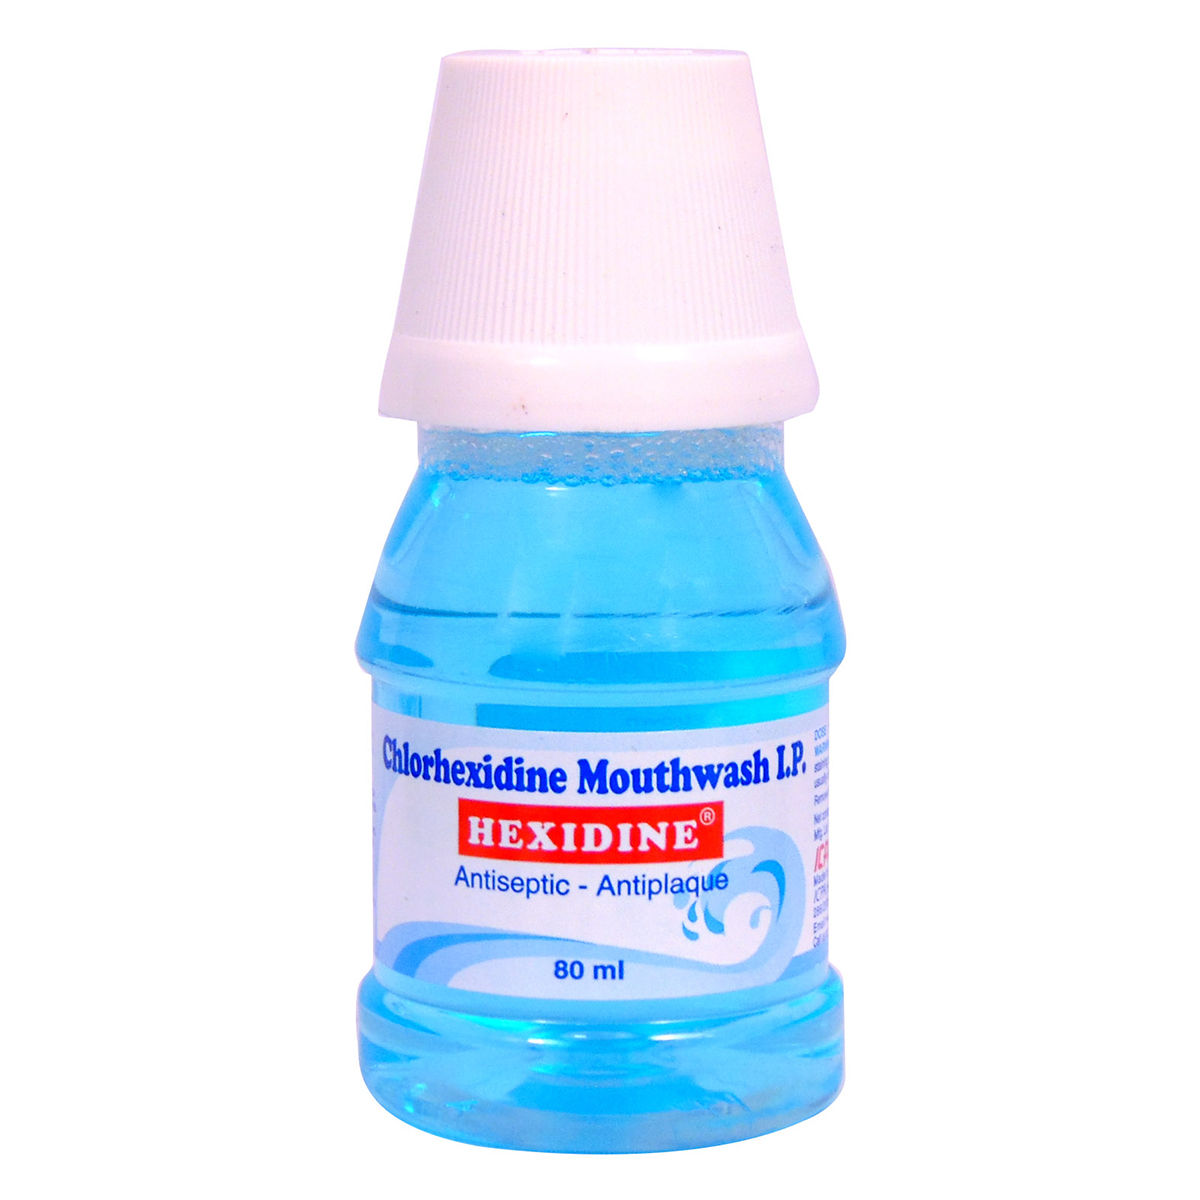 Buy Hexidine Antiseptic-Antiplaque Mouthwash, 80 ml Online